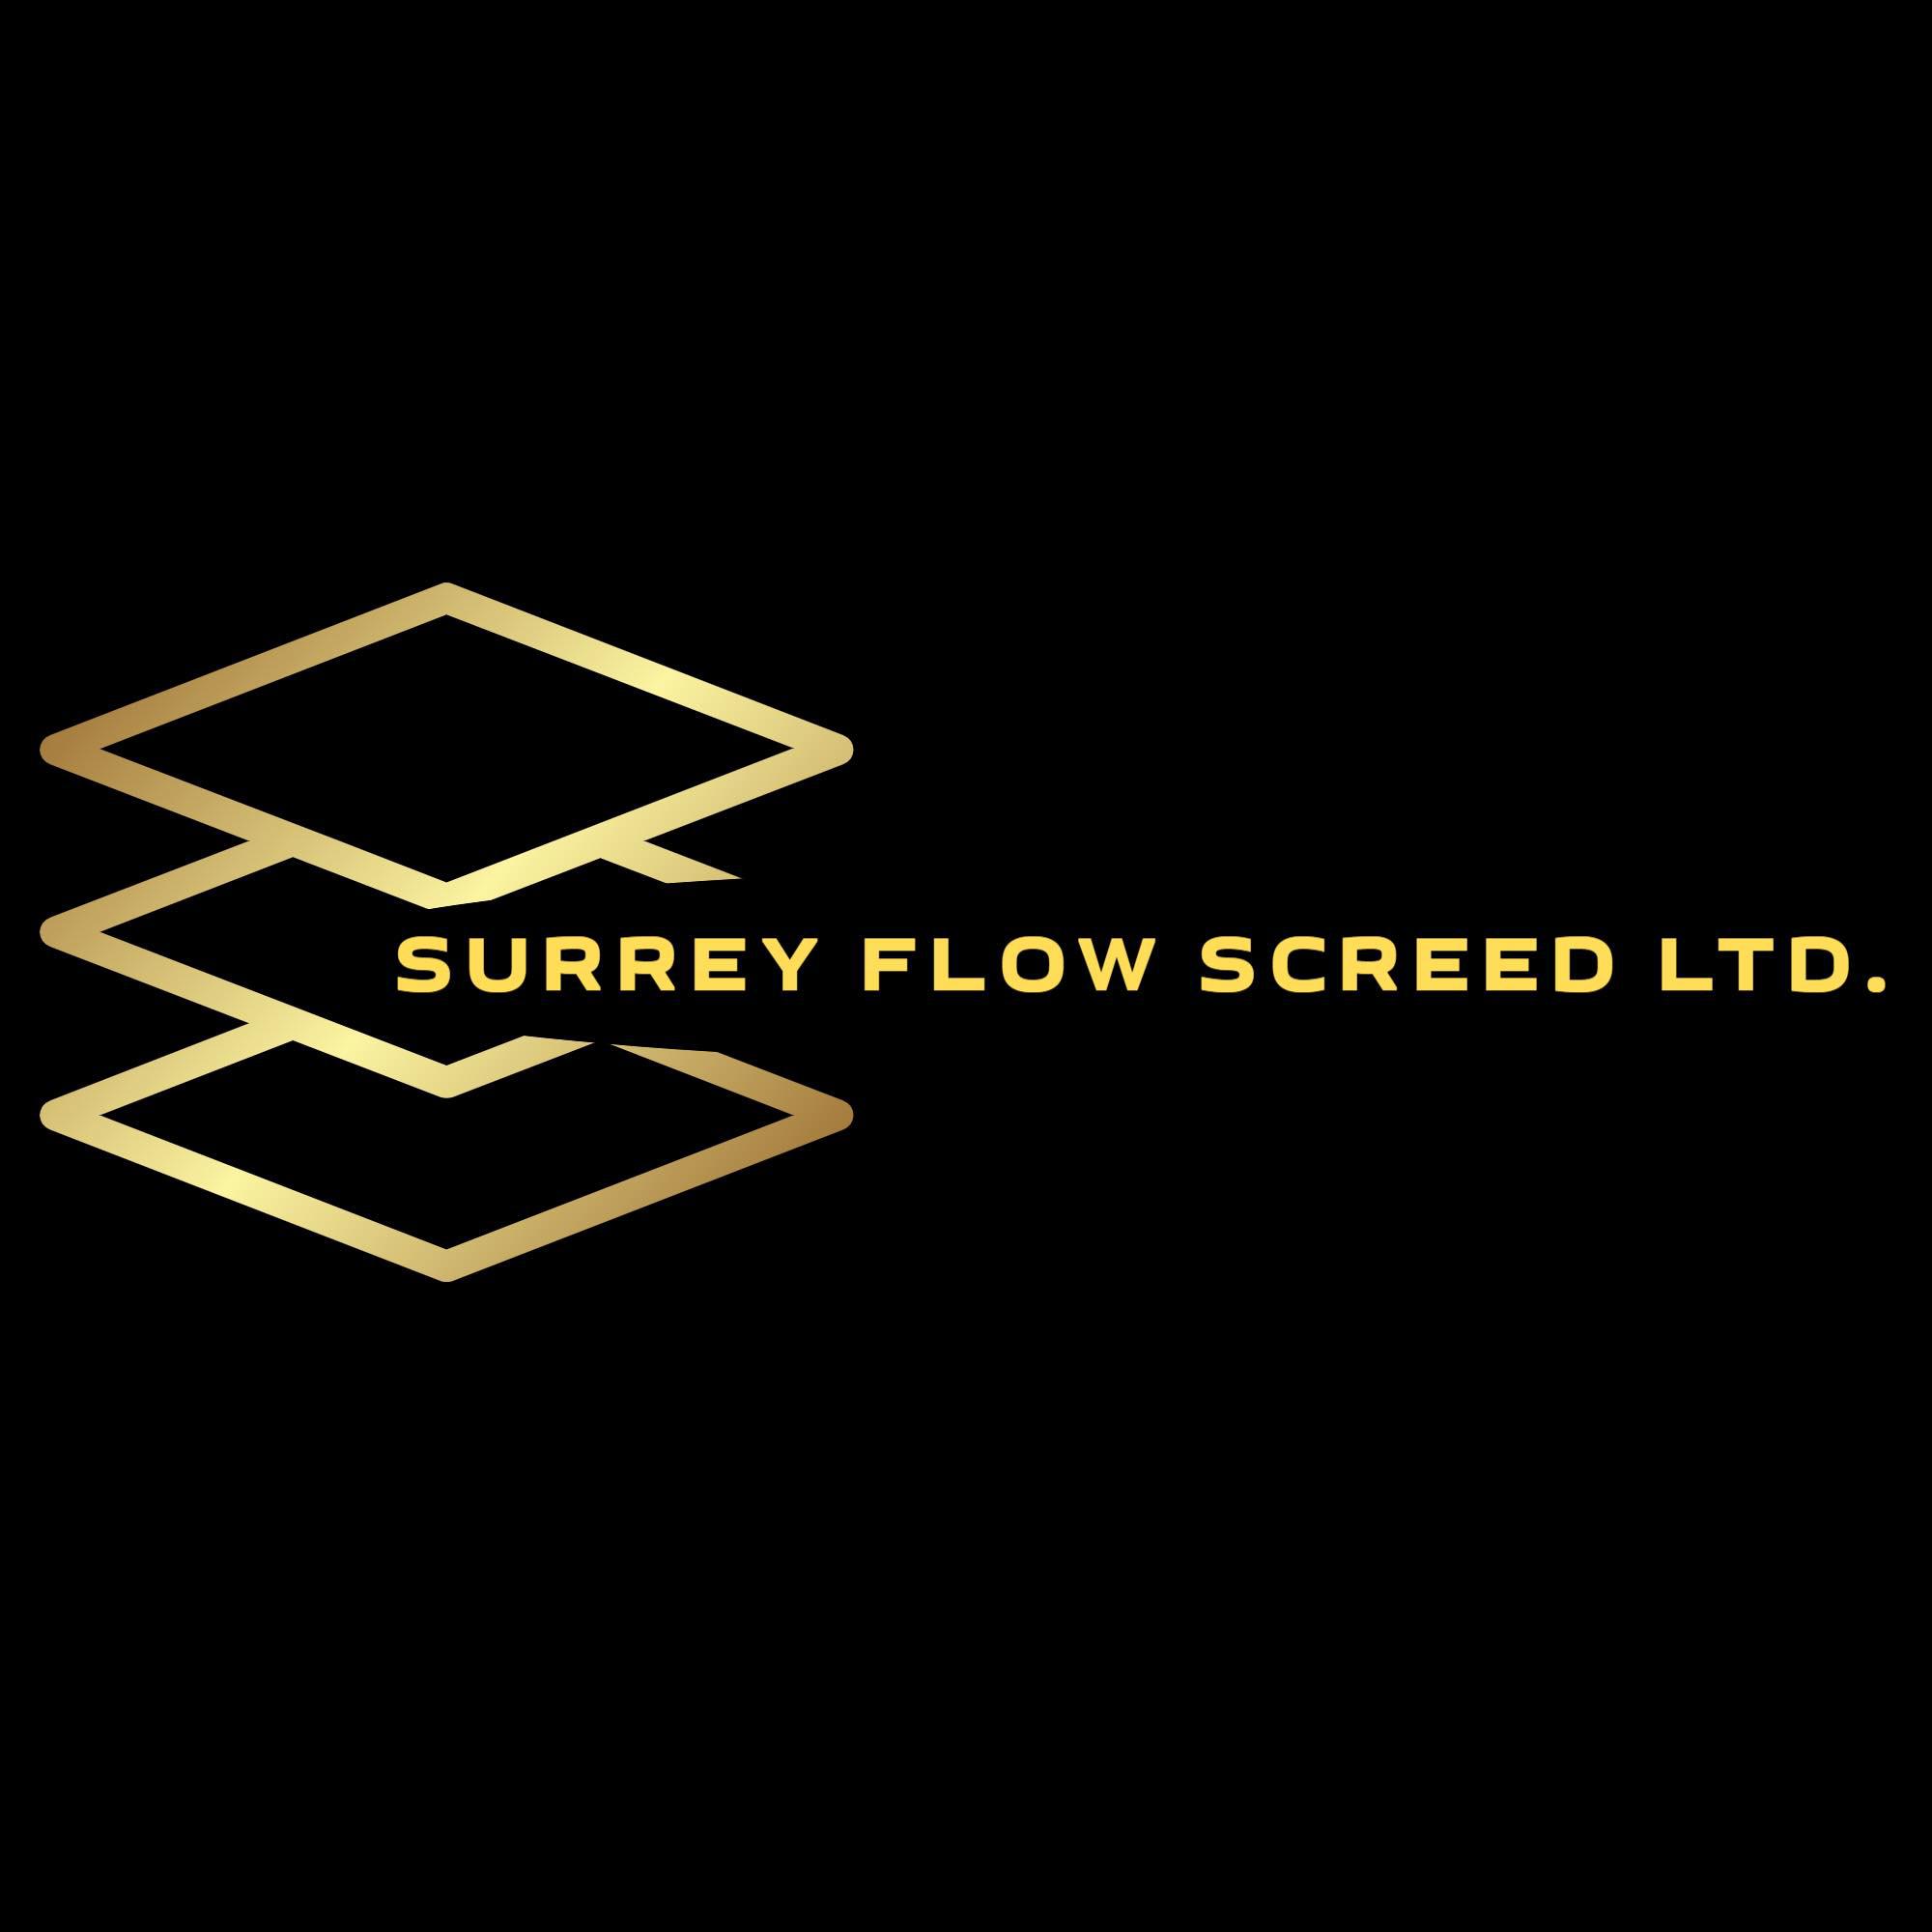 Images Surrey Flow Screed Ltd